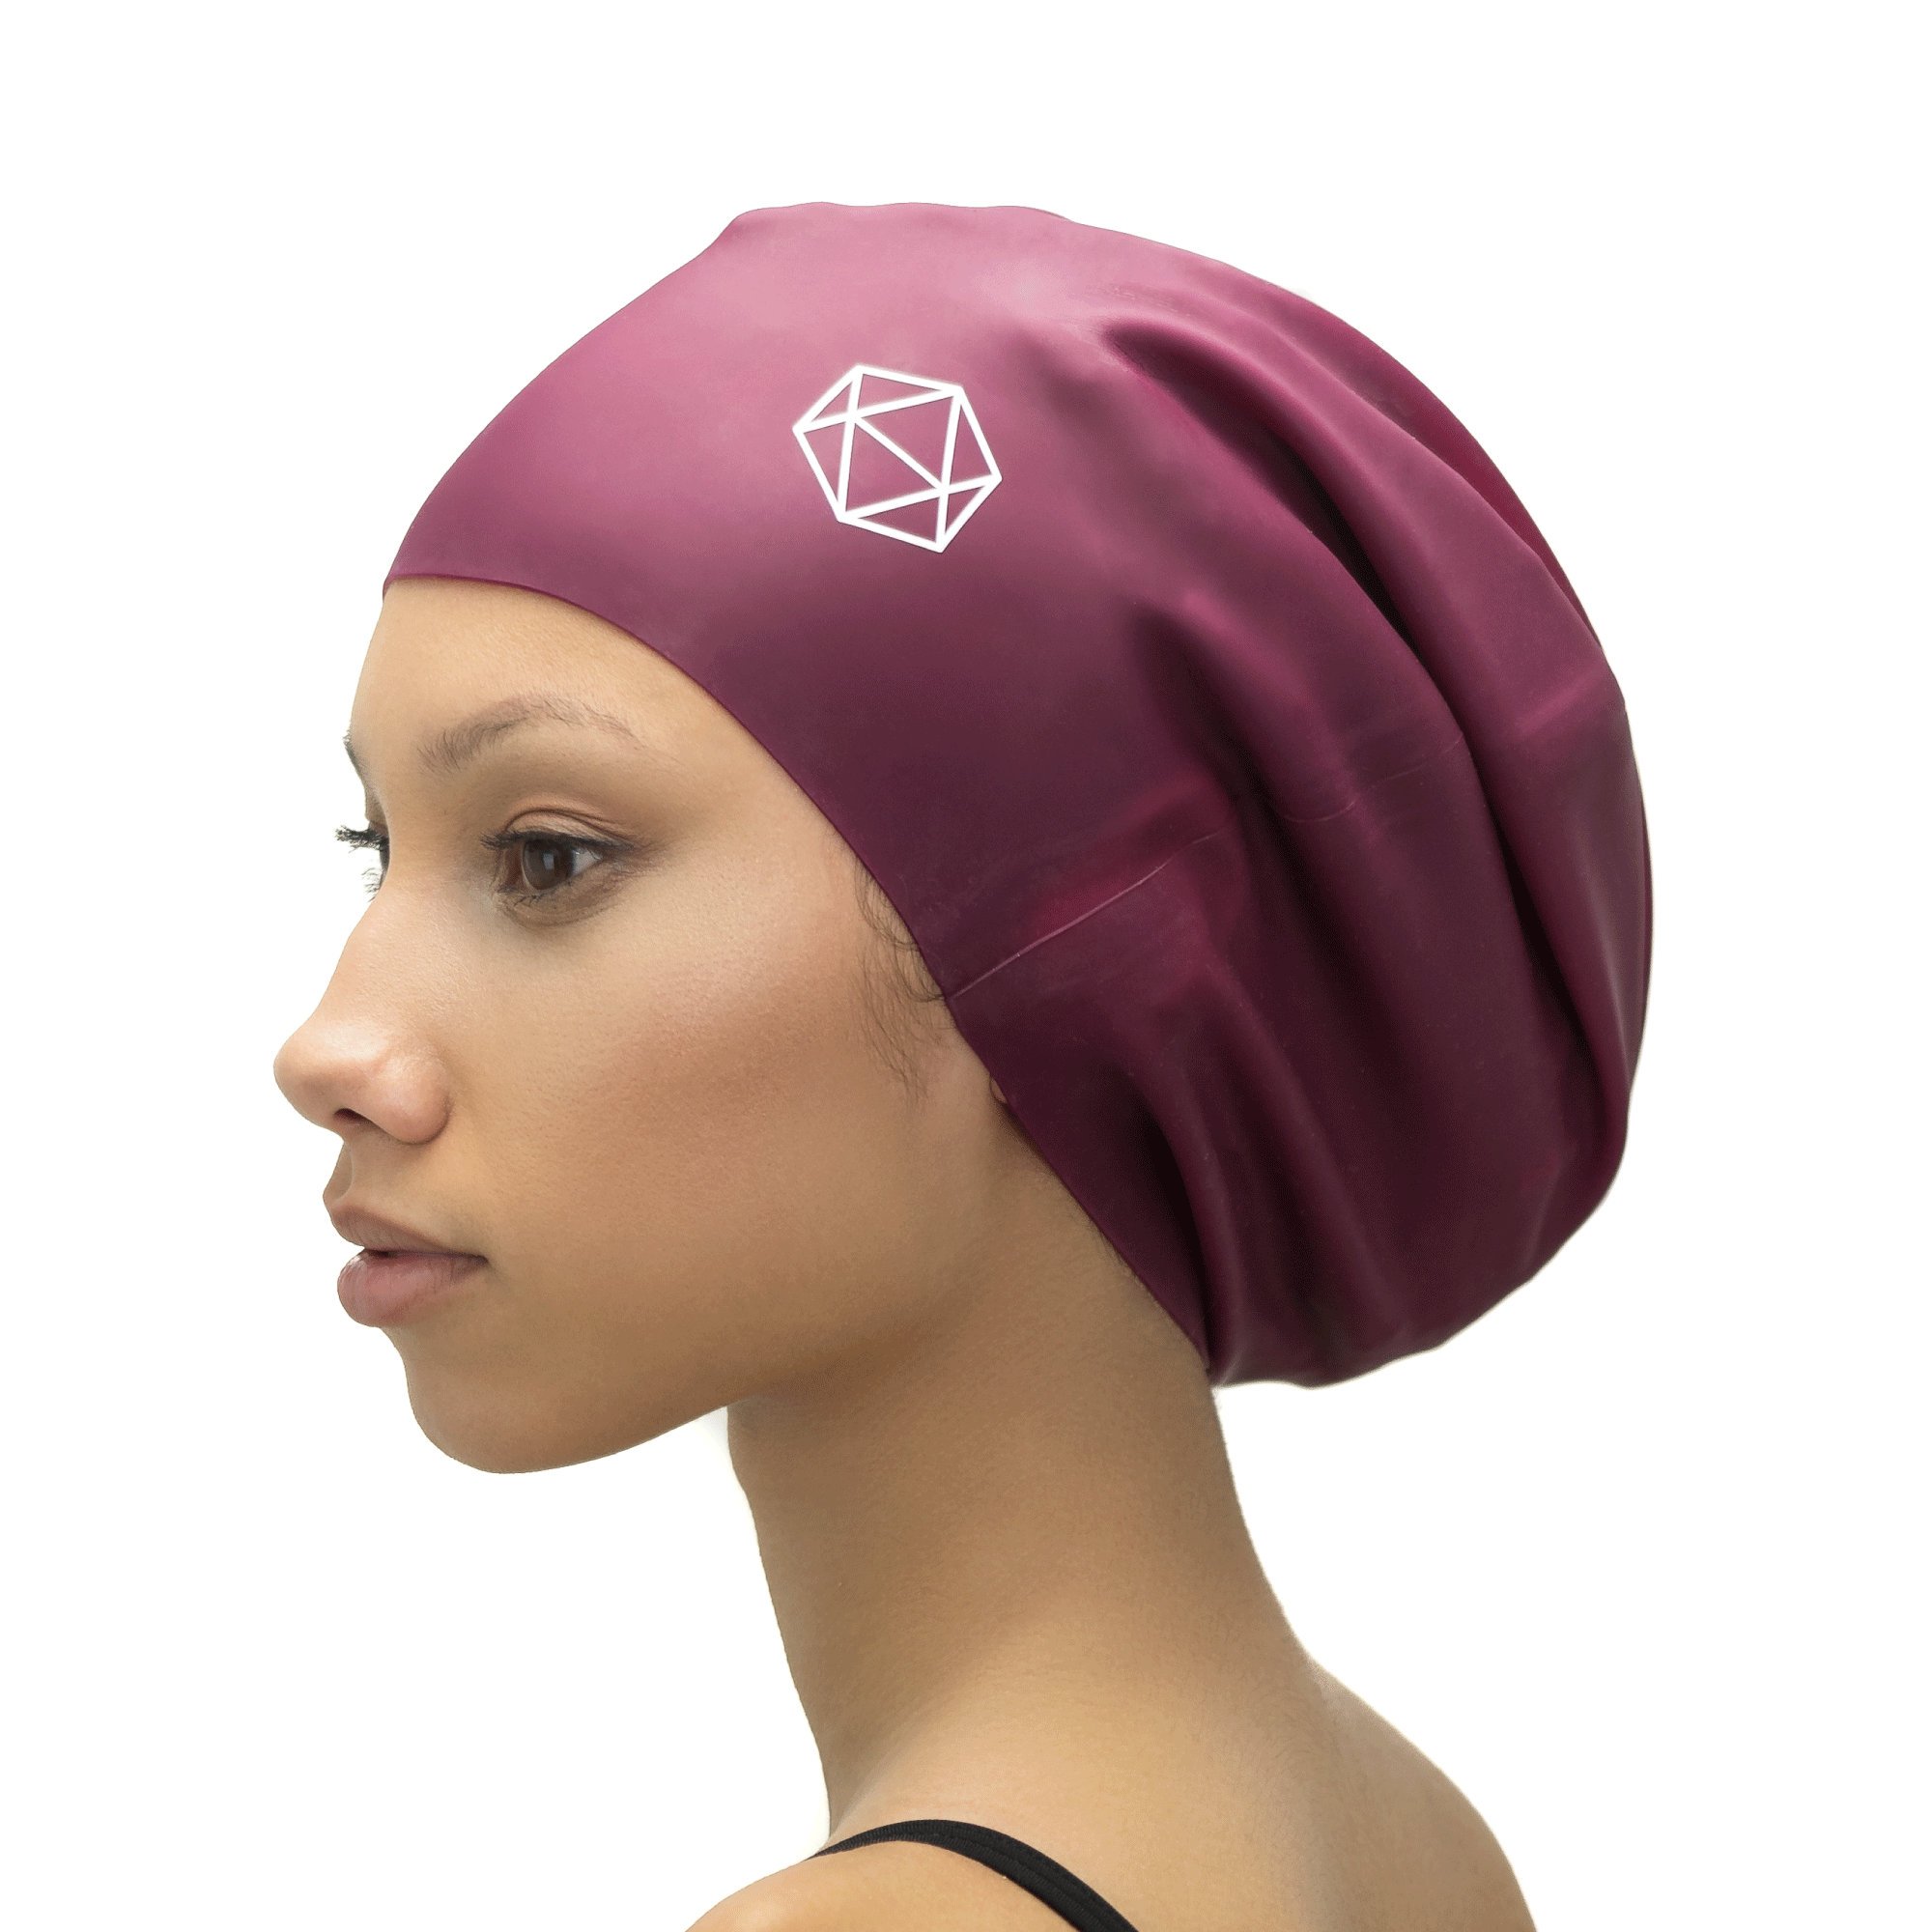 XL plavecká čepice pro Locs - kupte si koupací čepici koupací čepici pro dredy Dready Afros Rastazoepfe Extensions Braids online